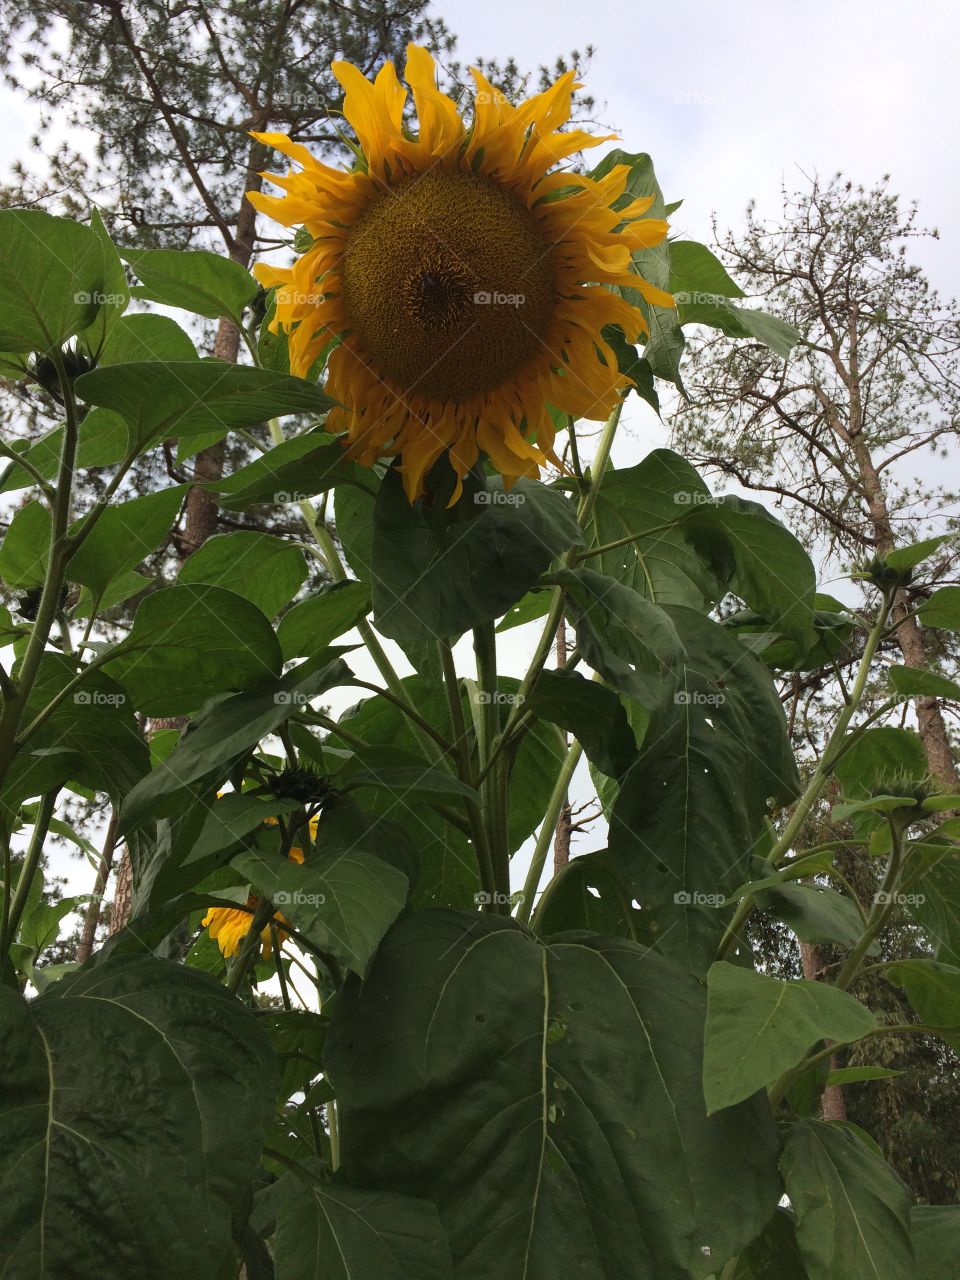 Sunflower in bloom.. big one